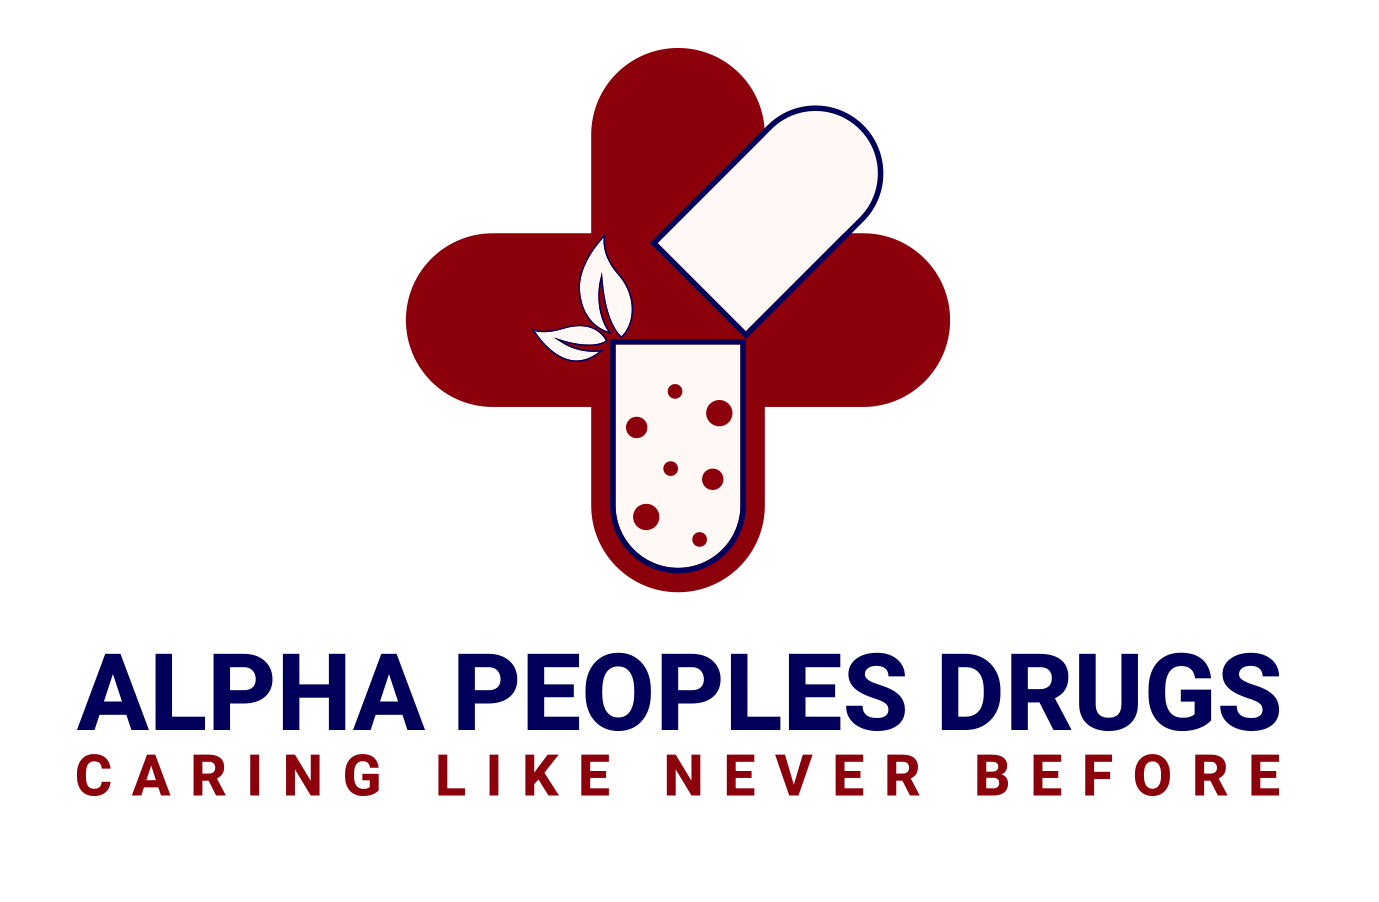 Alpha Peoples Drugs